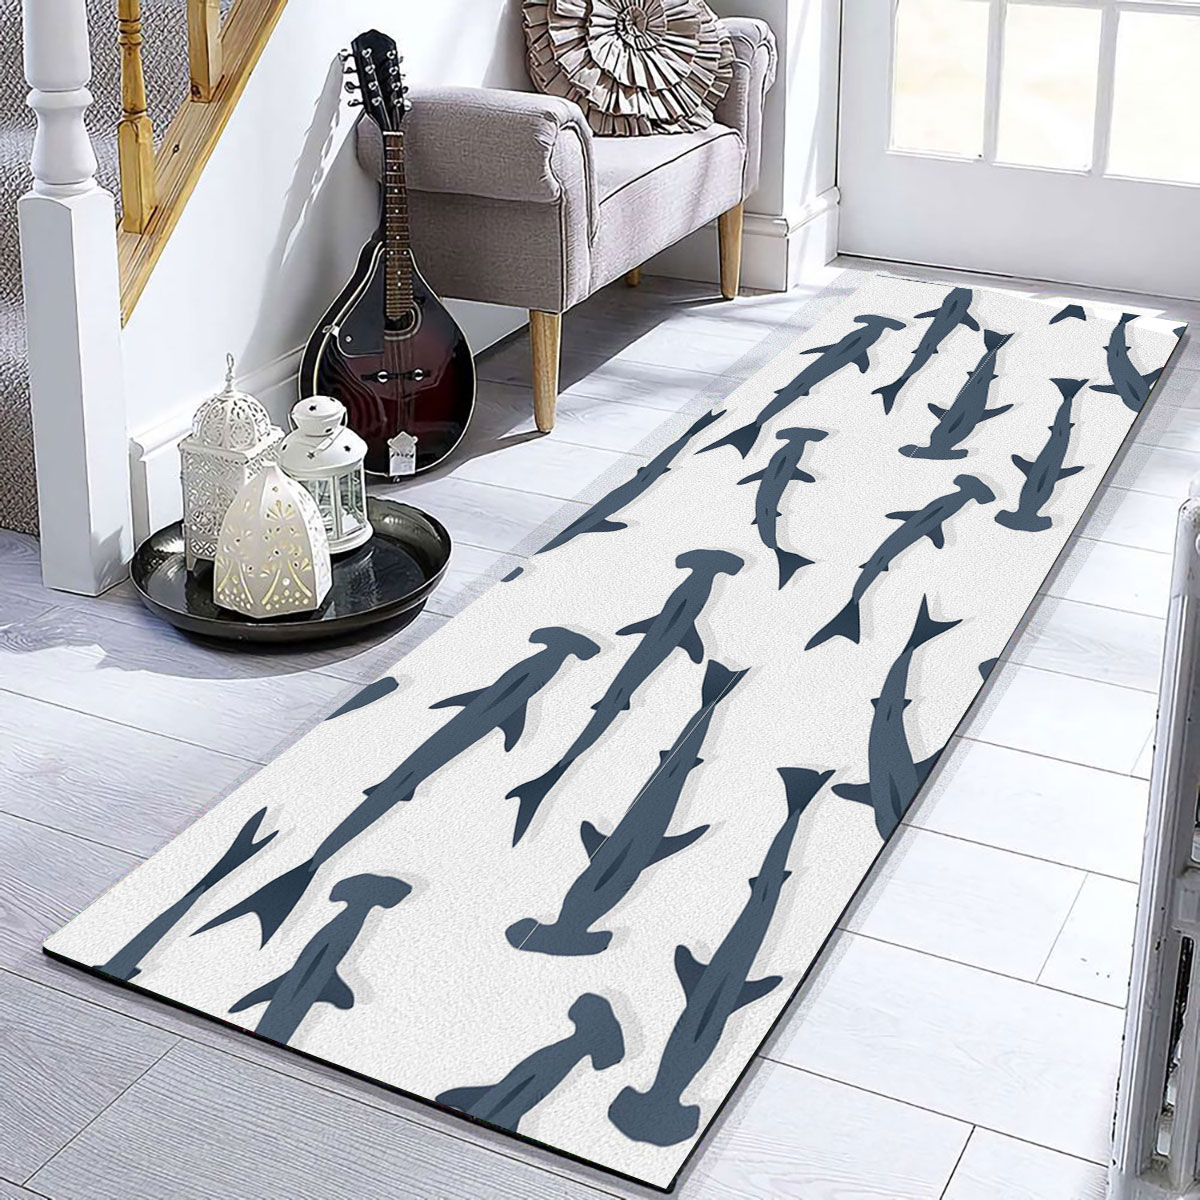 Grey Hammerhead Shark Runner Carpet